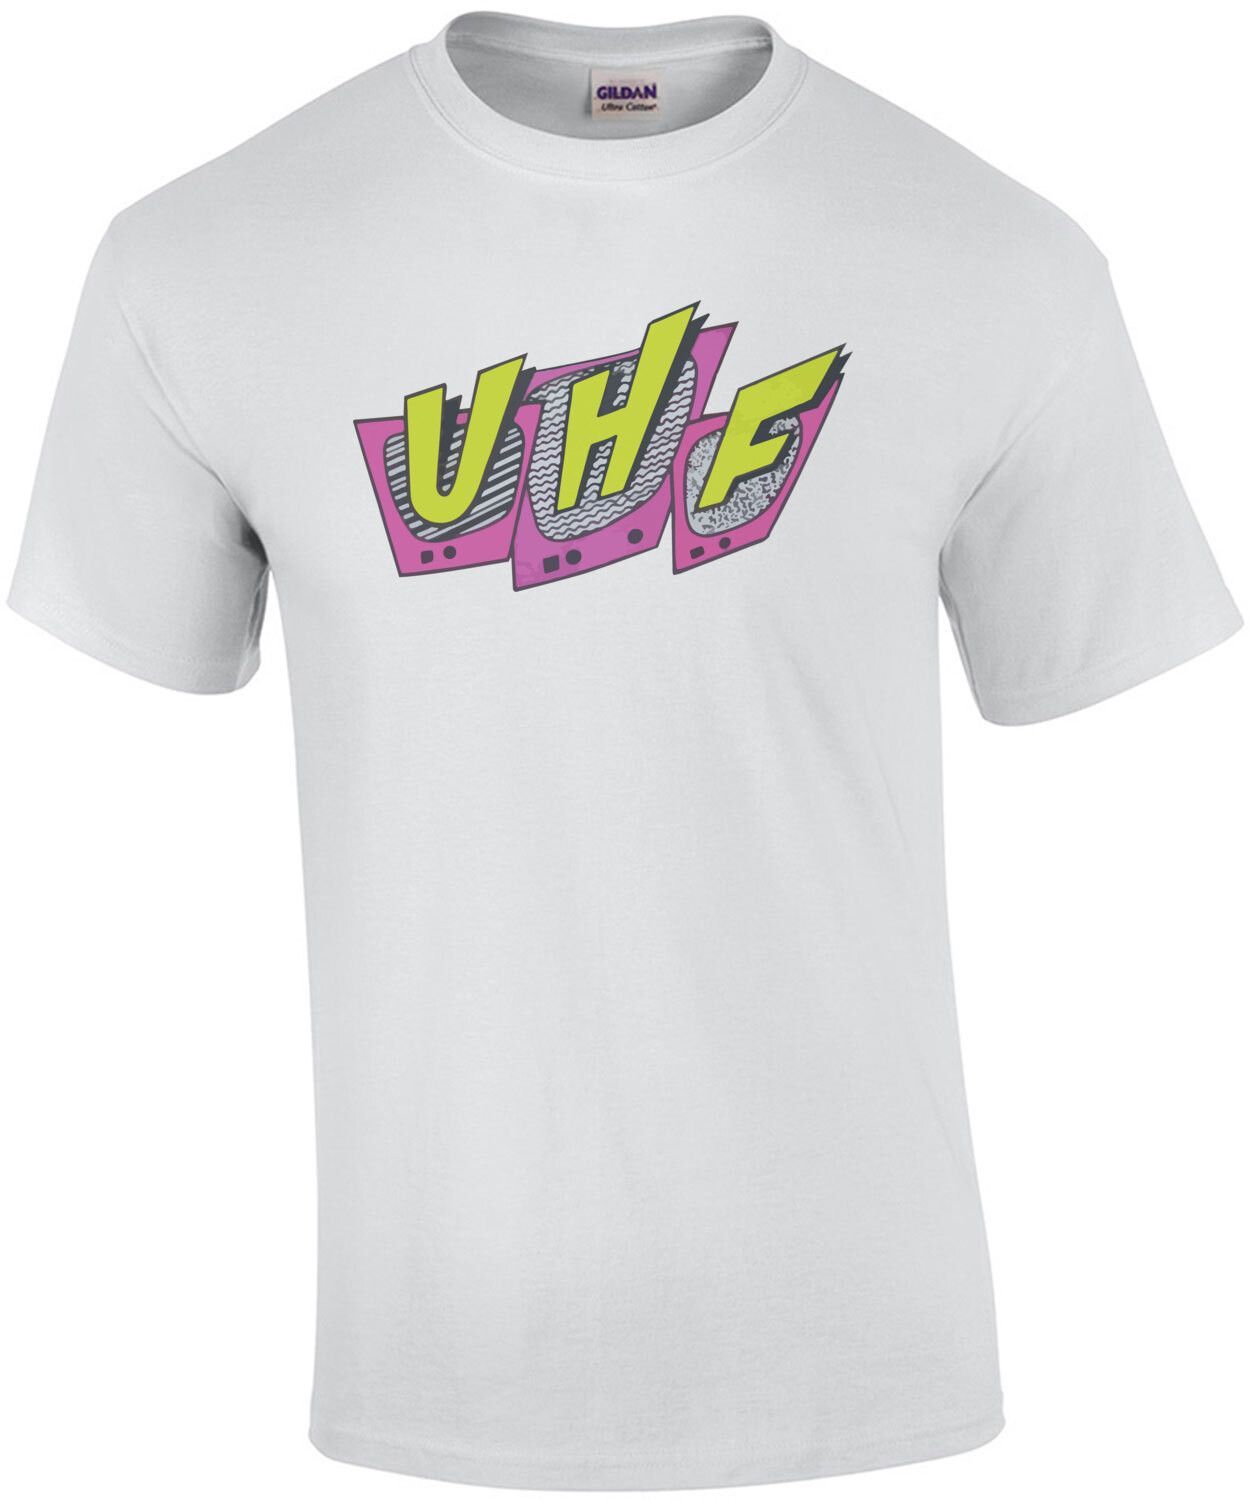 UHF - 80's T-Shirt